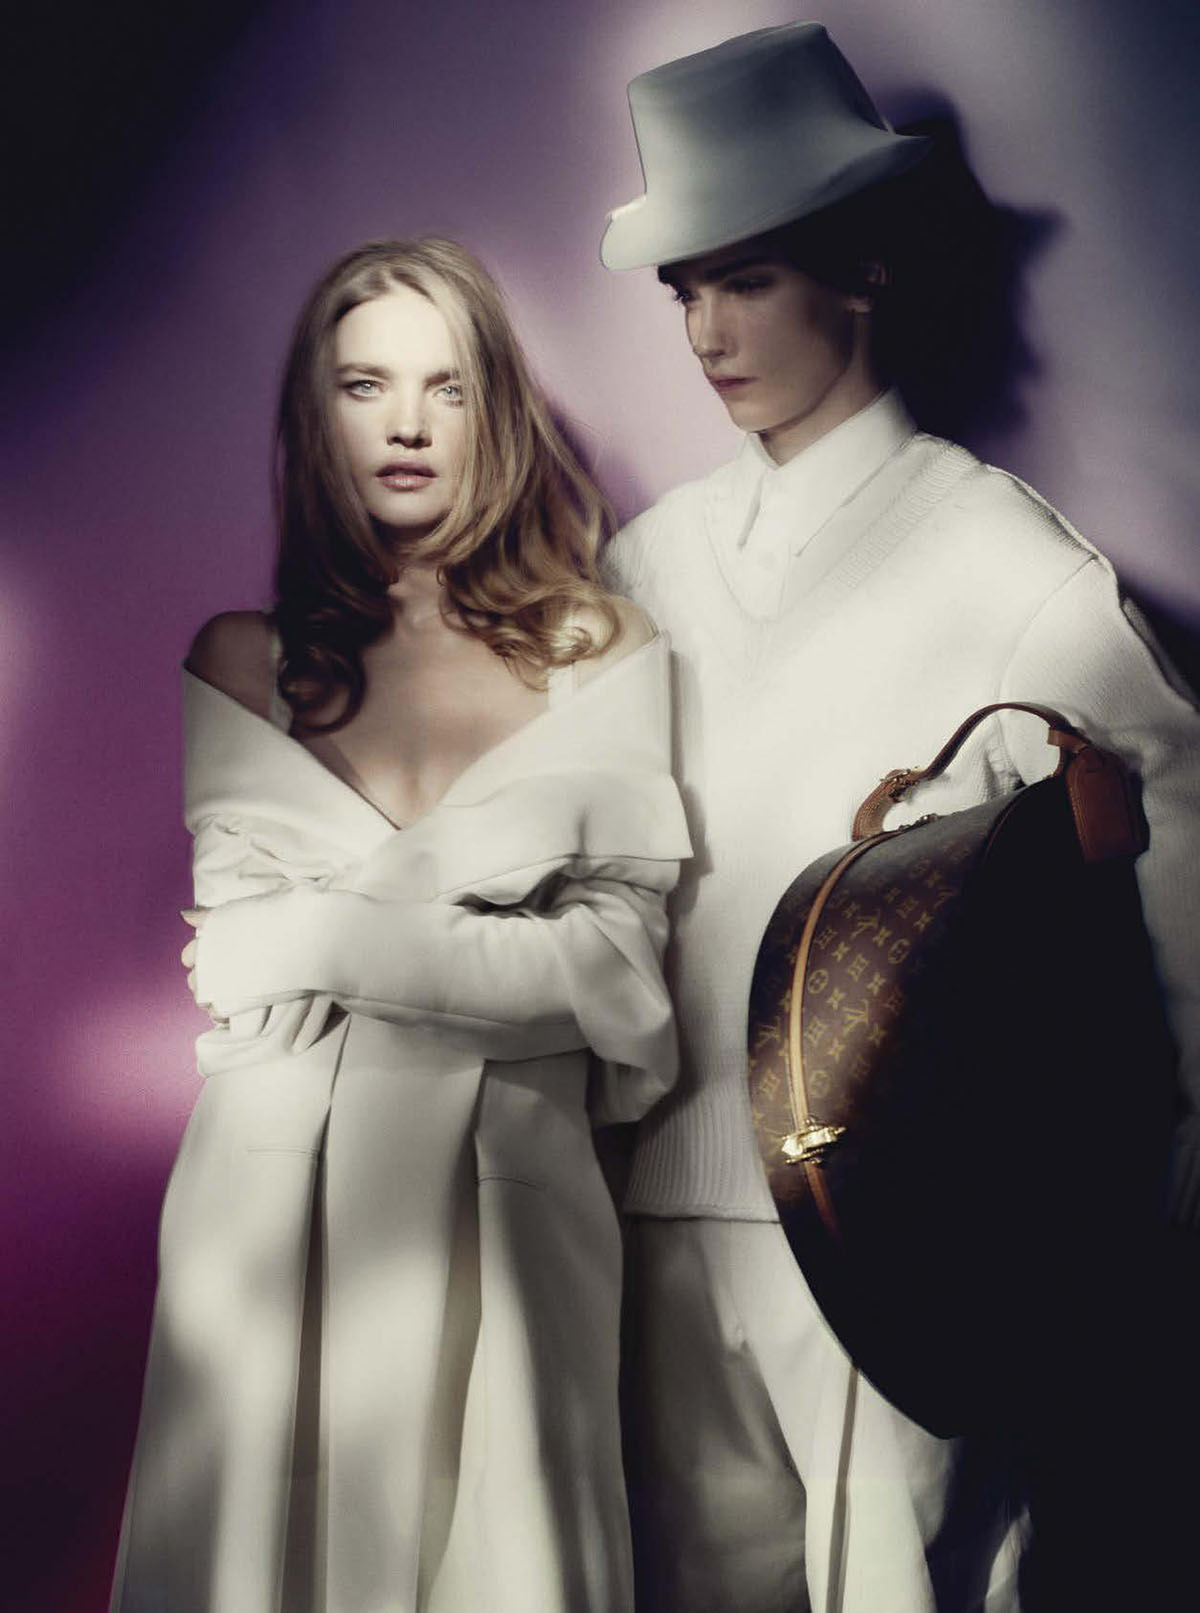 Natalia Vodianova covers Vogue Italia April 2021 by Paolo Roversi